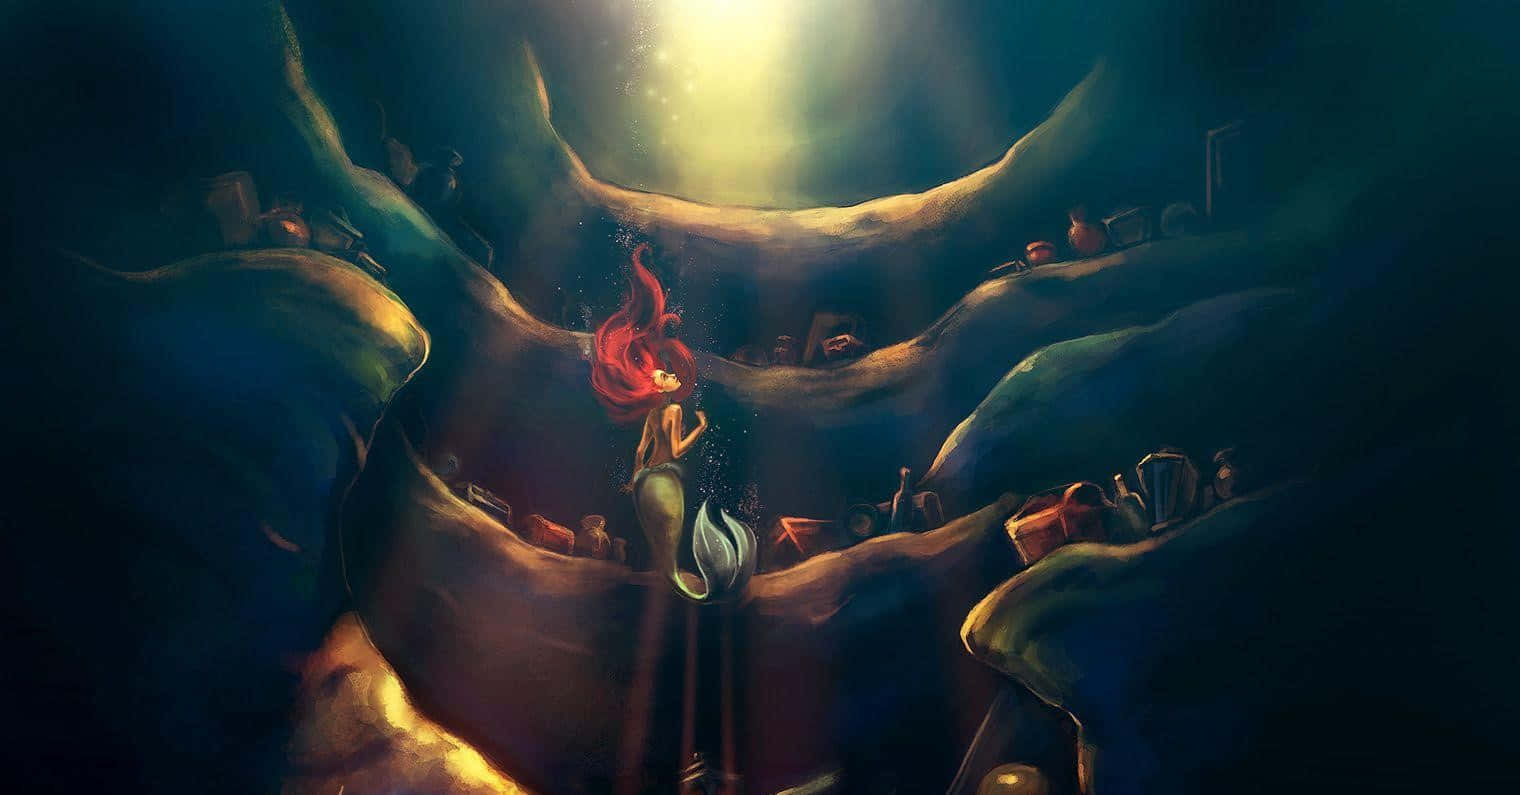 En magisk øjeblik fra Disneys Den lille Havfrue. Wallpaper